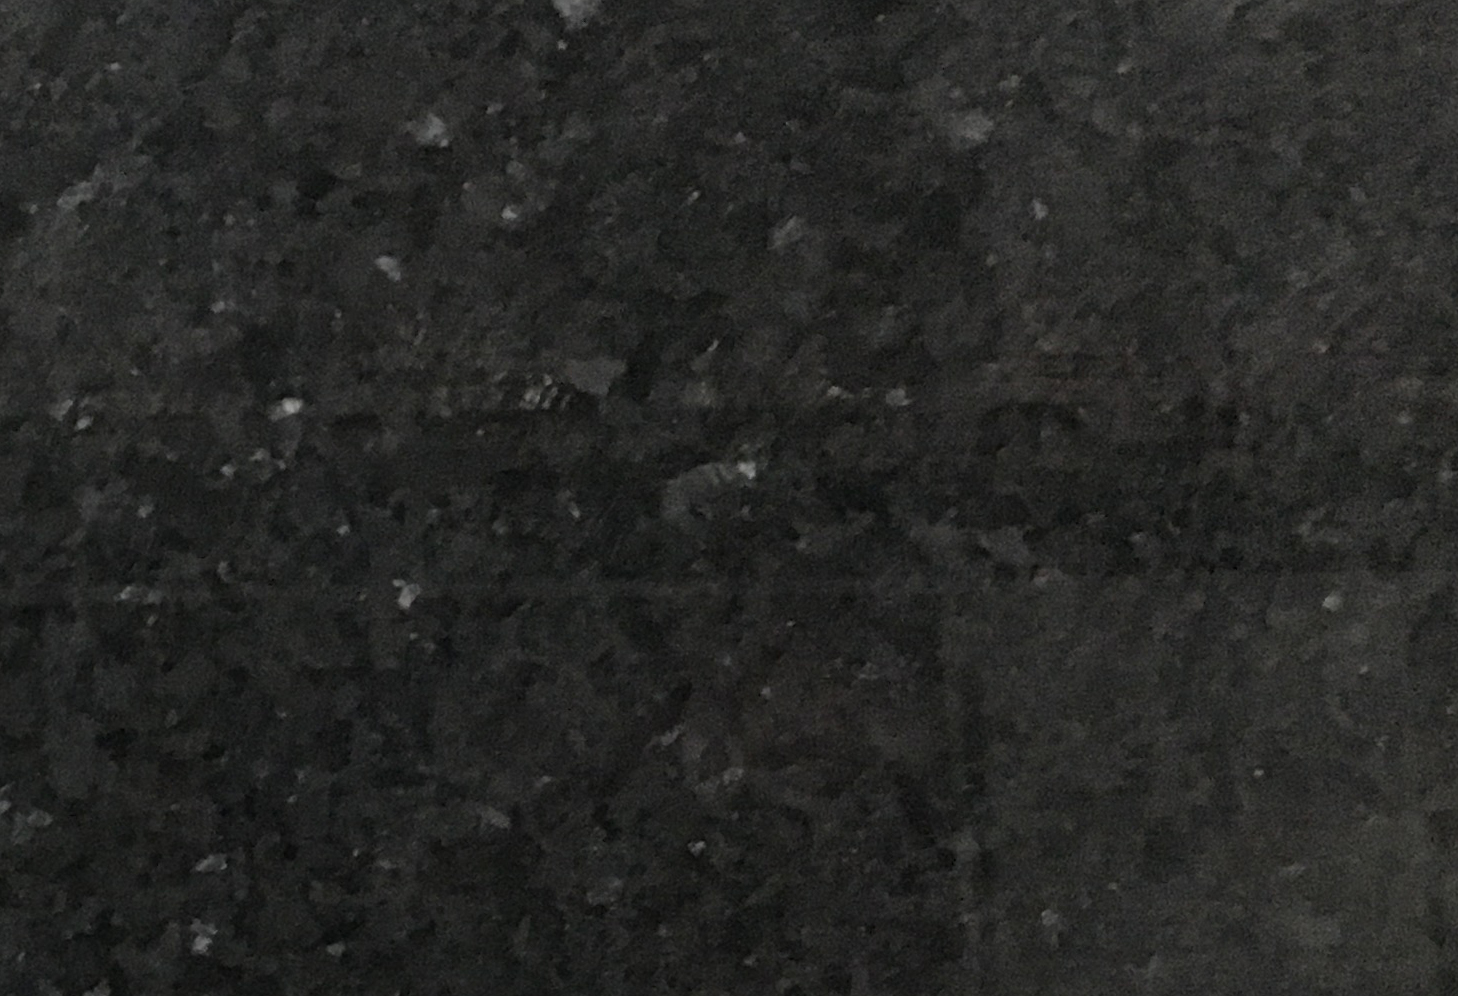 Angola Black Granite Negro Angola 